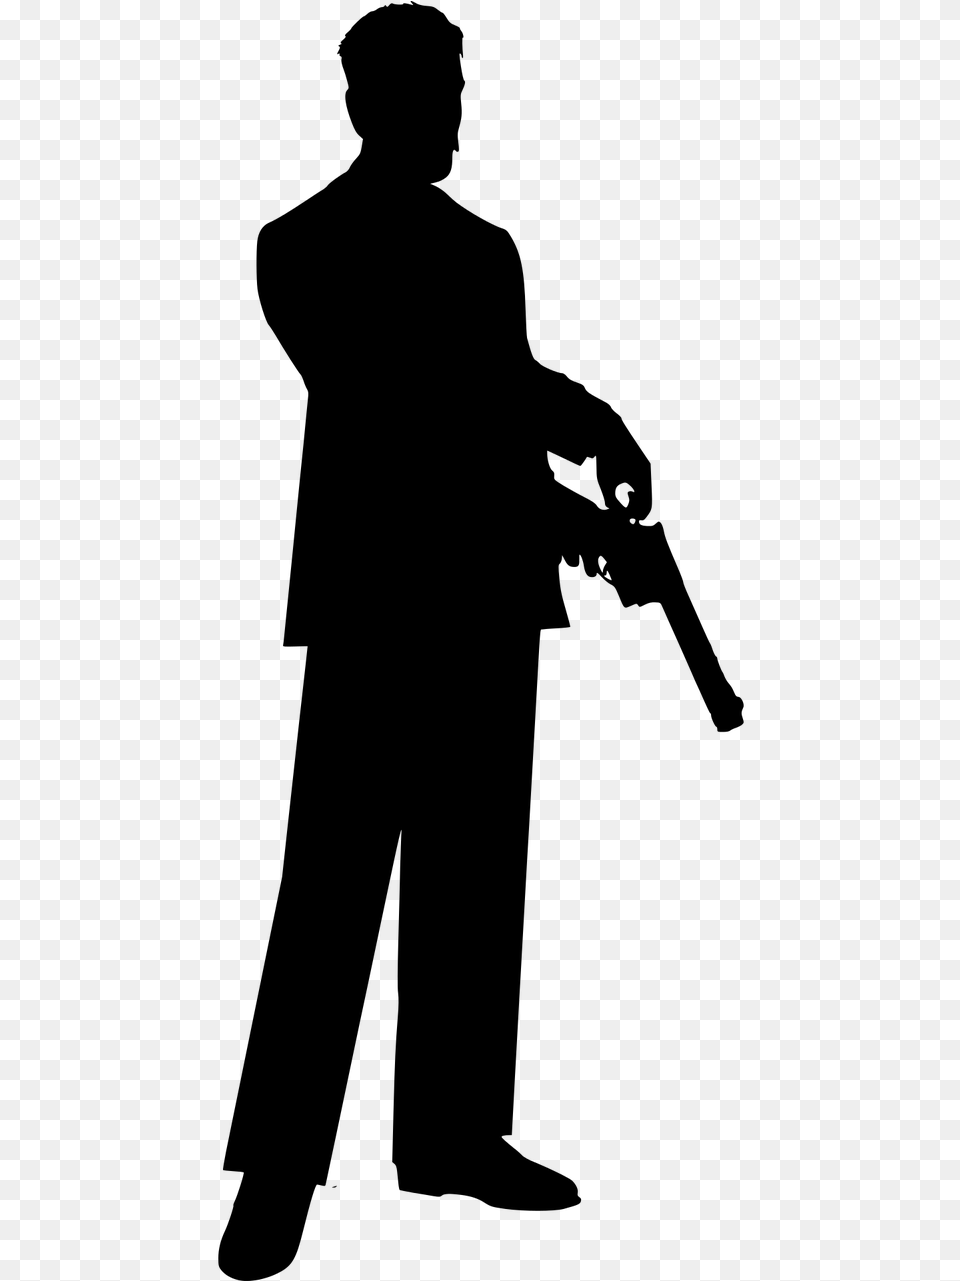 Silhouette Gun Weapon Man With Gun Silhouette, Gray Png